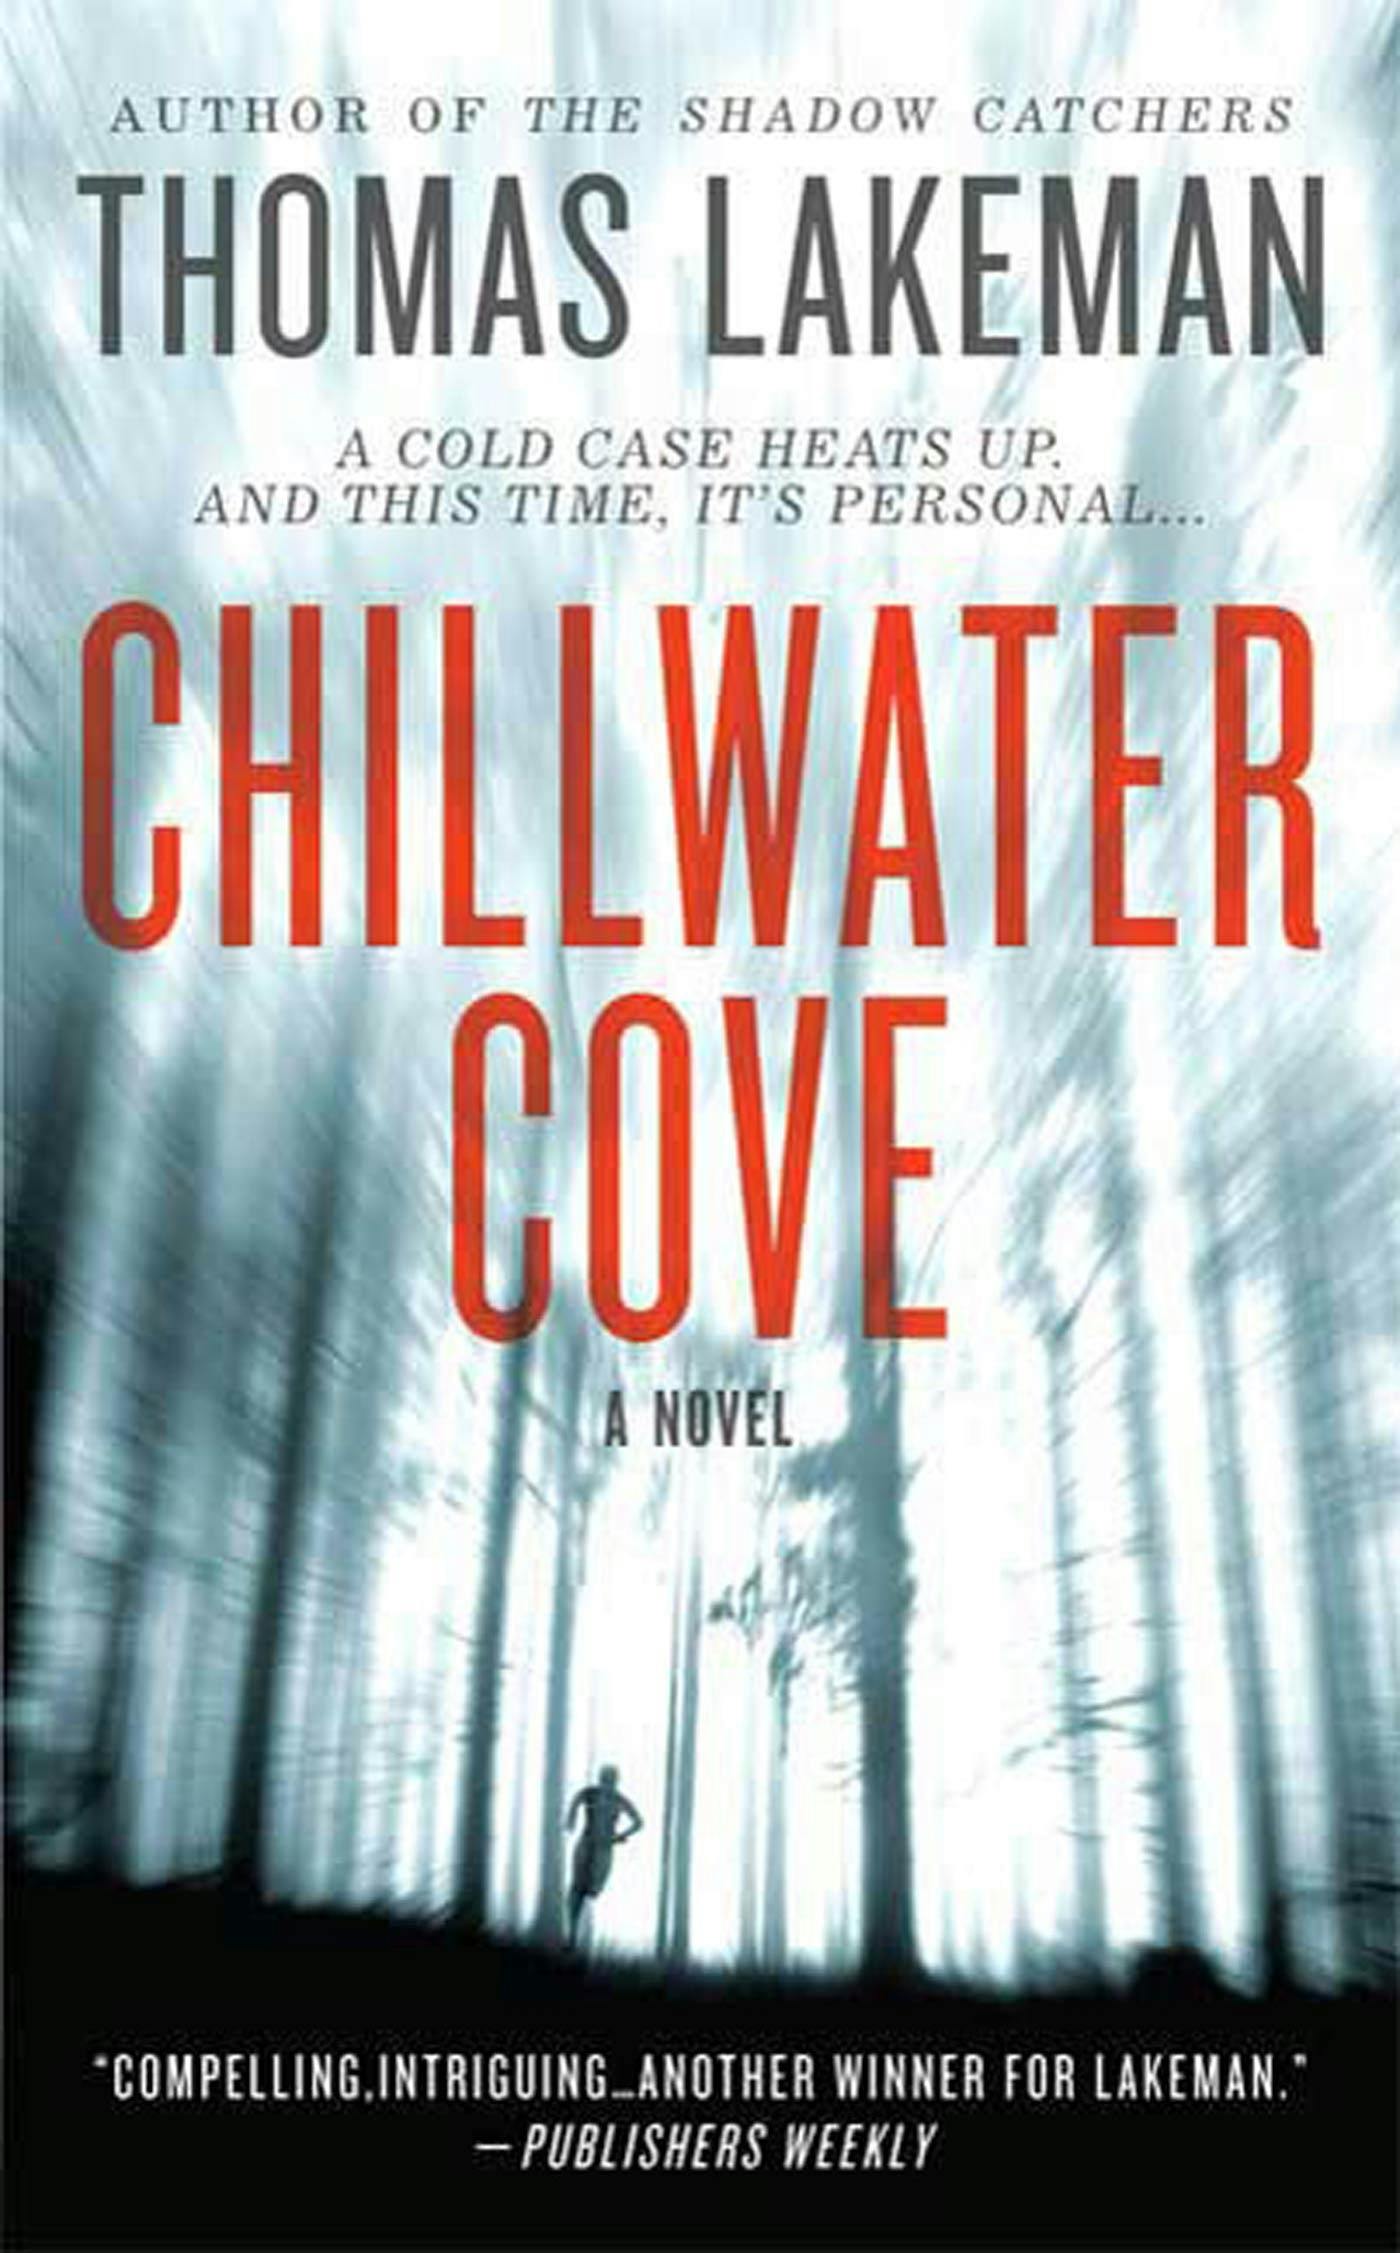 Chillwater Cove